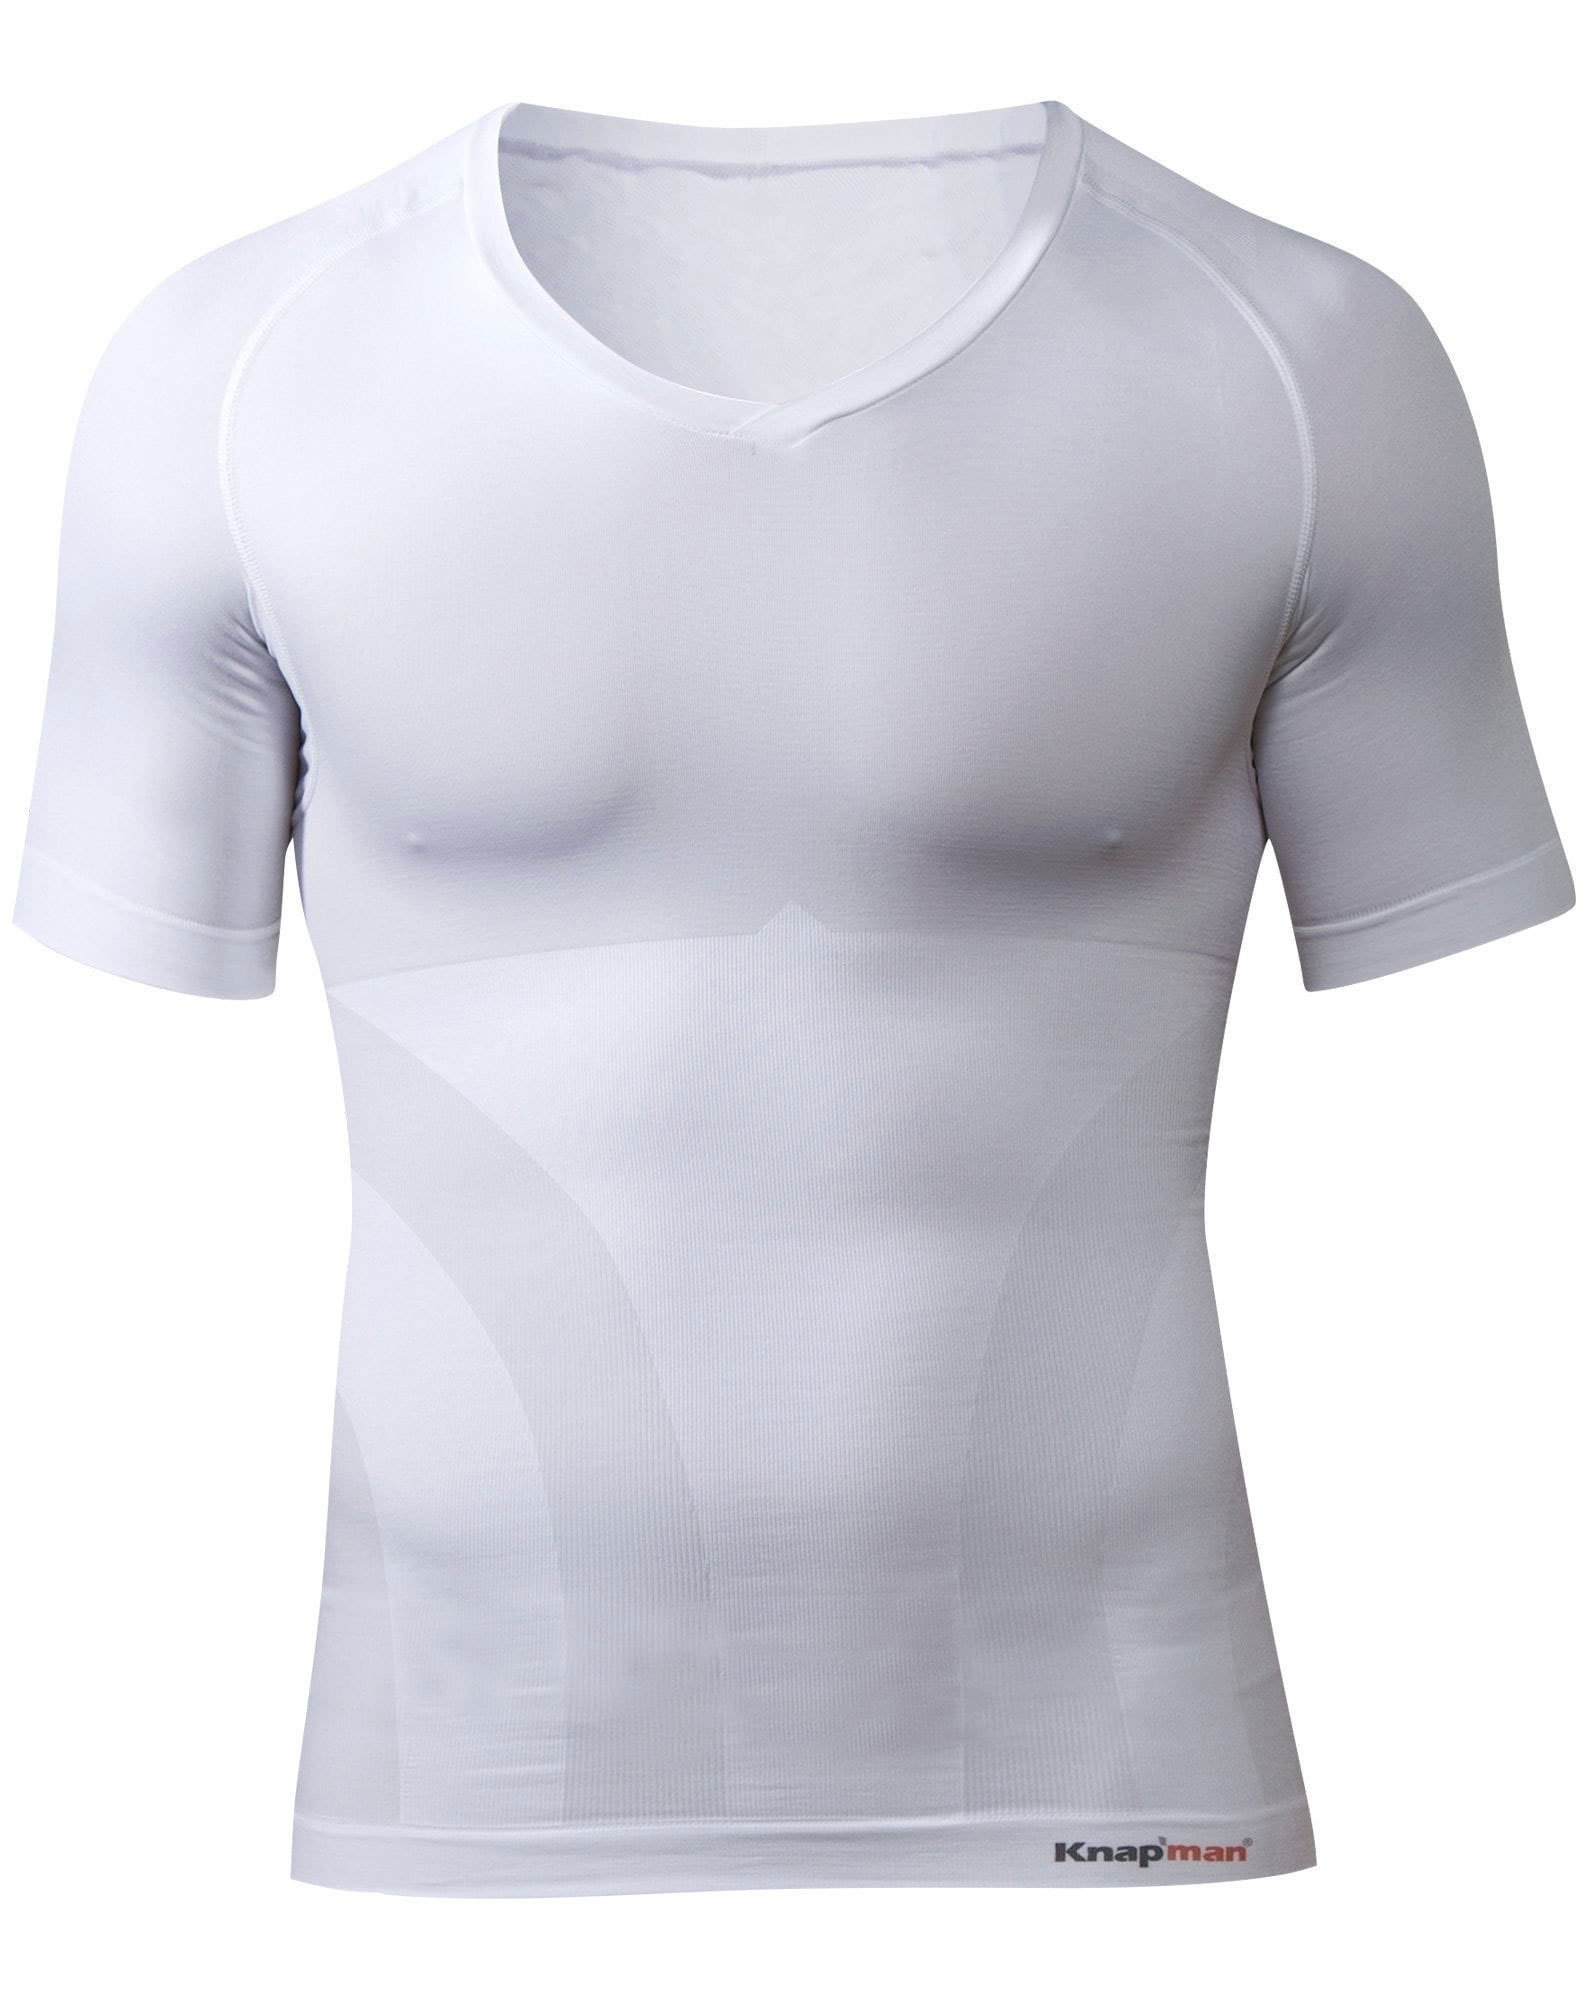 Knap'man | Shop Knap'man Zoned Cotton Comfort V-hals shirt wit